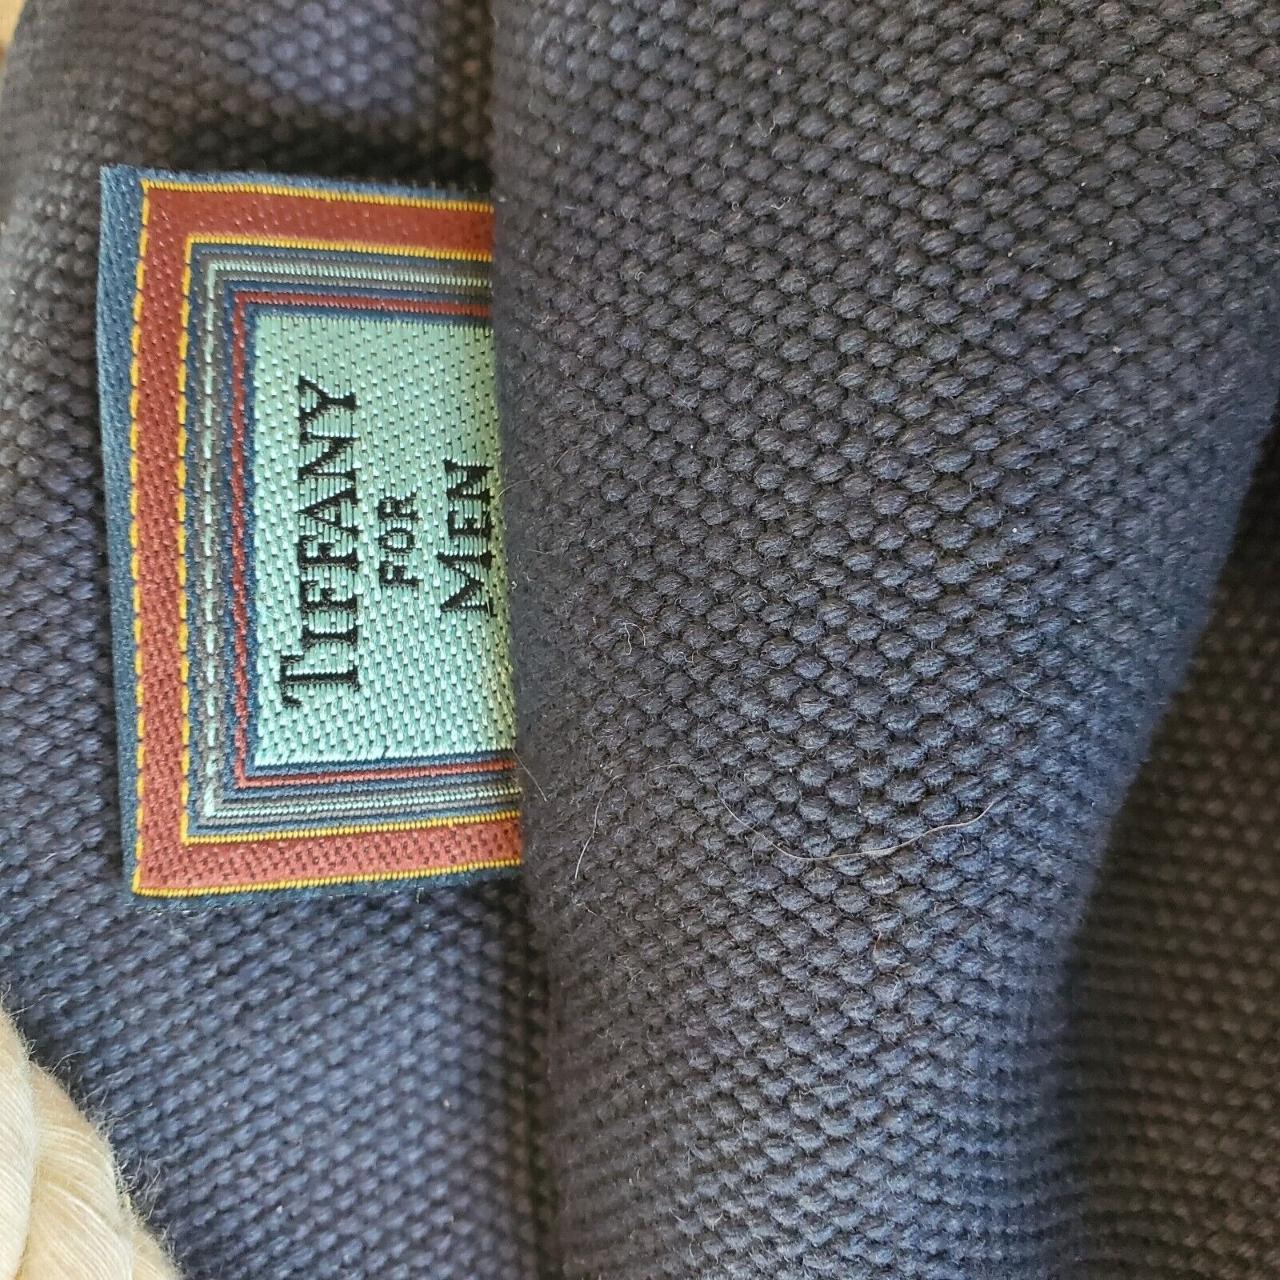 This vintage Tiffany & Co bucket bag in navy blue is - Depop